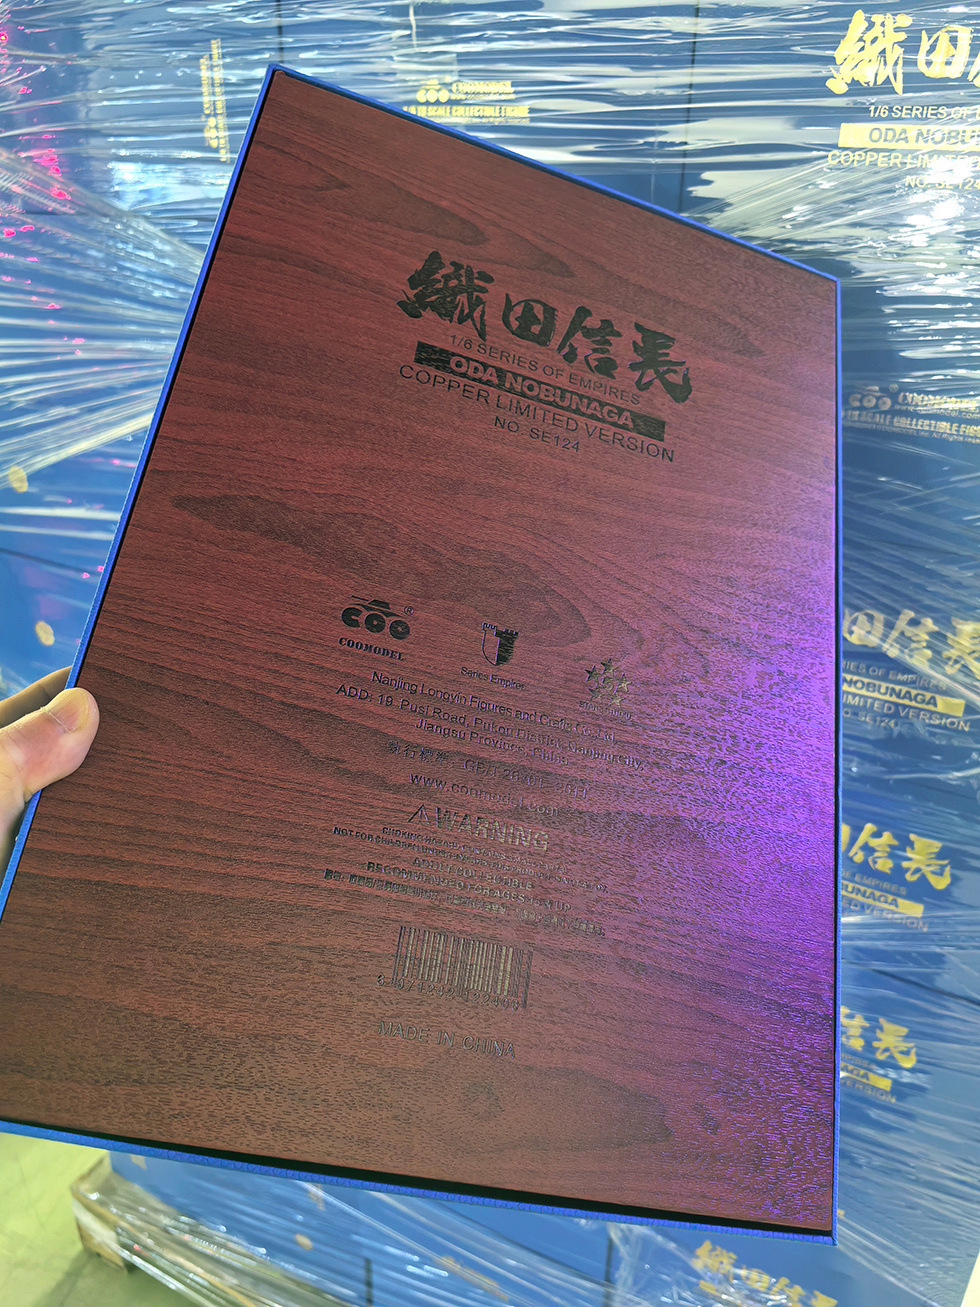 Coomodel - NEW PRODUCT: COOMODEL: 1/6 Empire Series - Oda Nobunaga Samurai Edition/Hunting Edition/Pure Copper Standard Edition/Pure Copper Limited Collection Edition #SE124 B6b66012